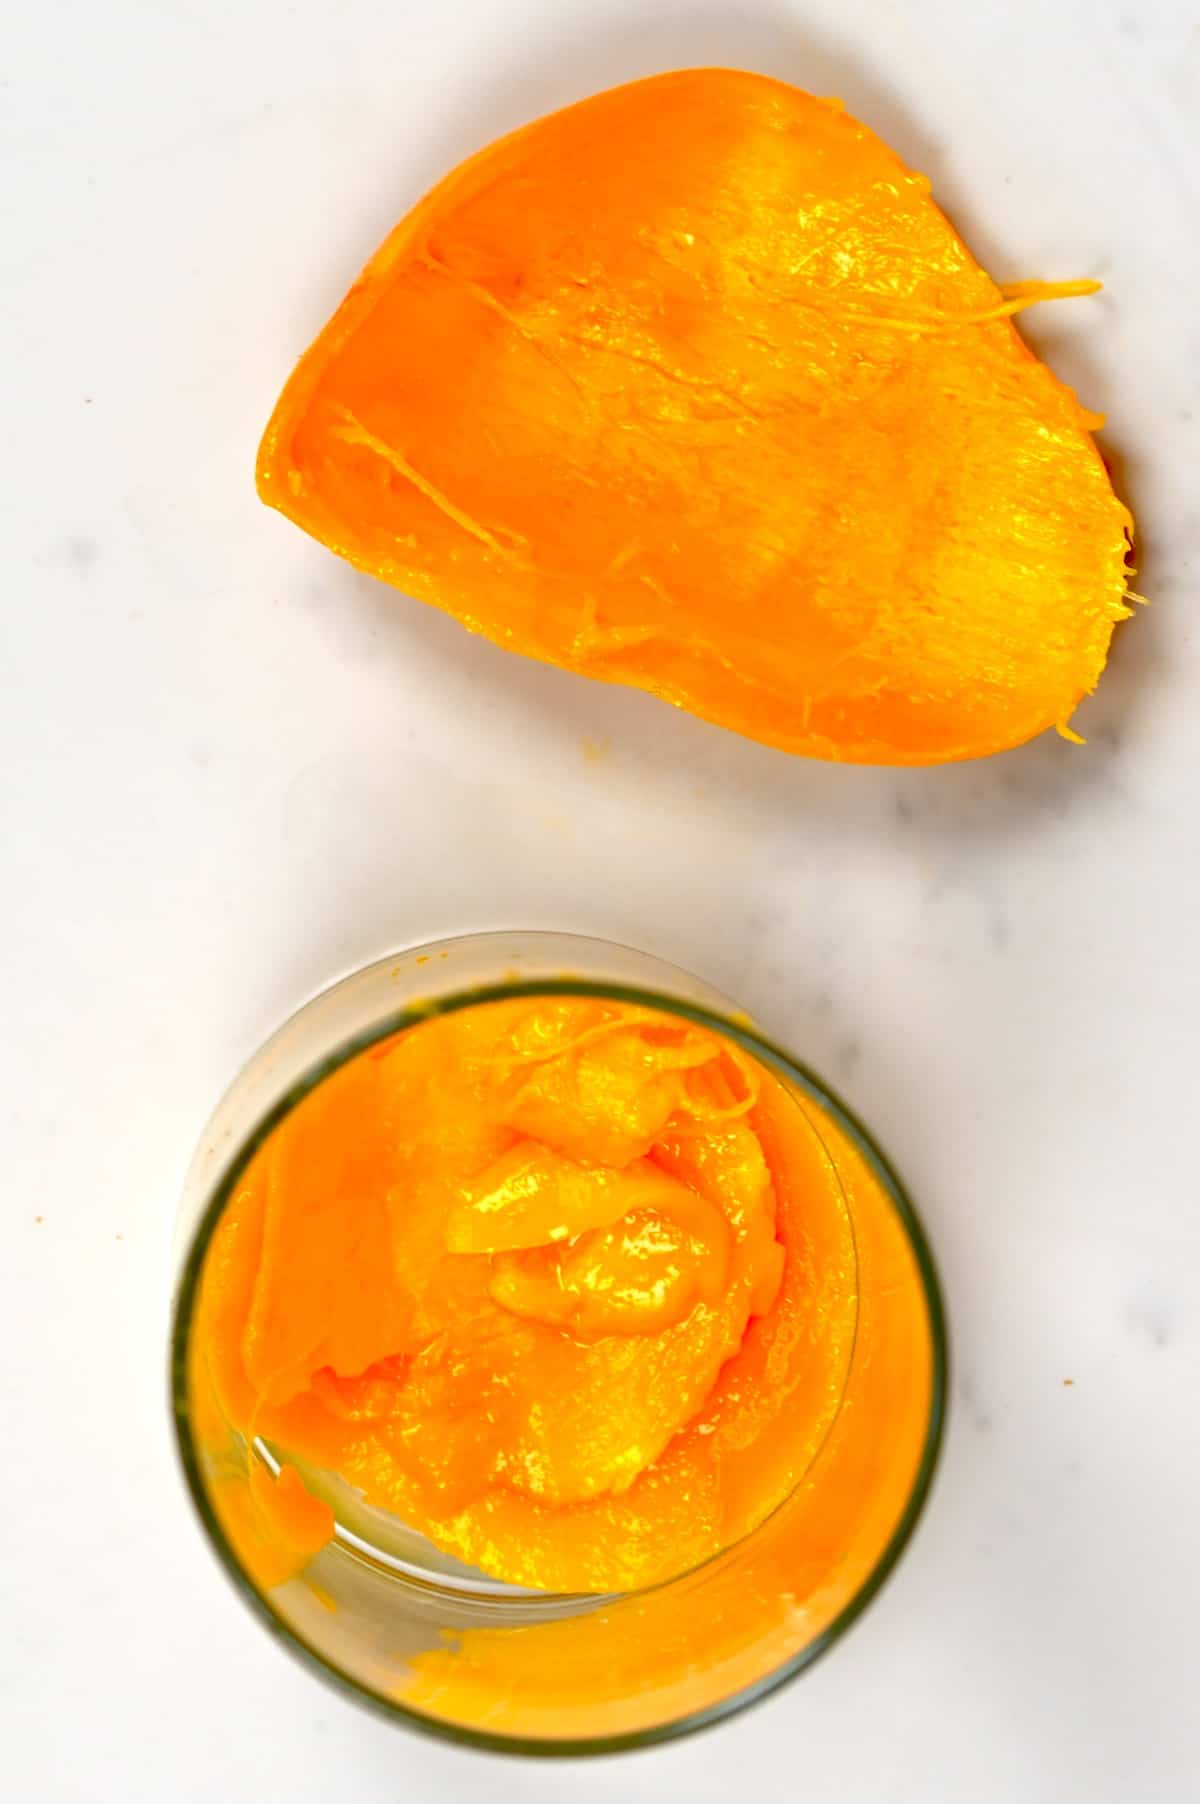 mango peel and ripe mango in a cup